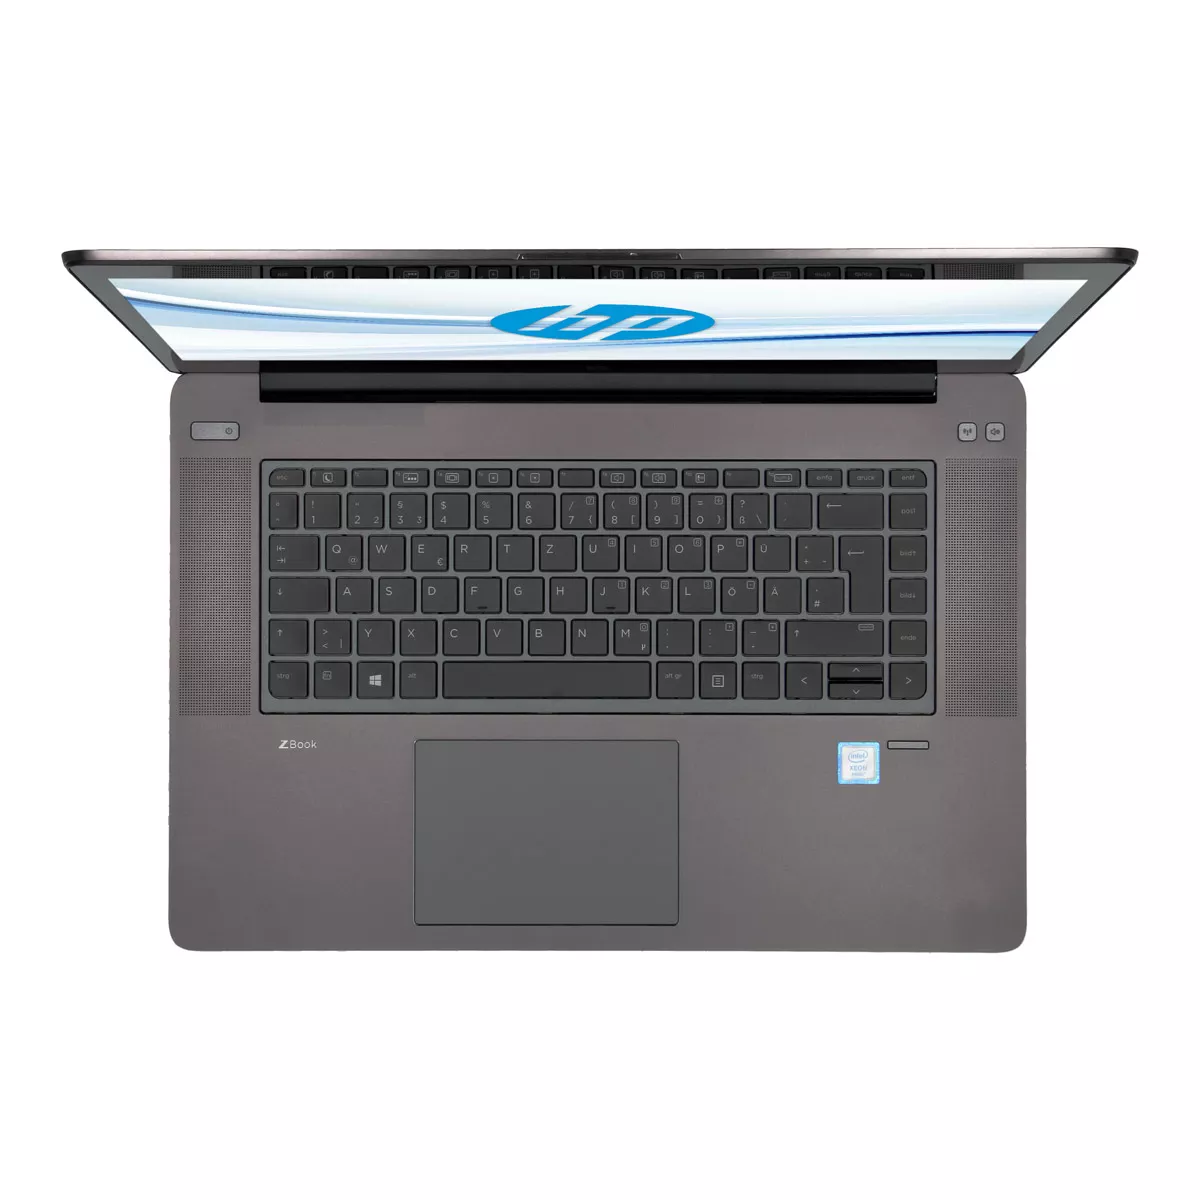 HP ZBook Studio G3 Xeon E3-1505Mv5 Full-HD nVidia Quadro M1000M 512 GB M.2 SSD Webcam